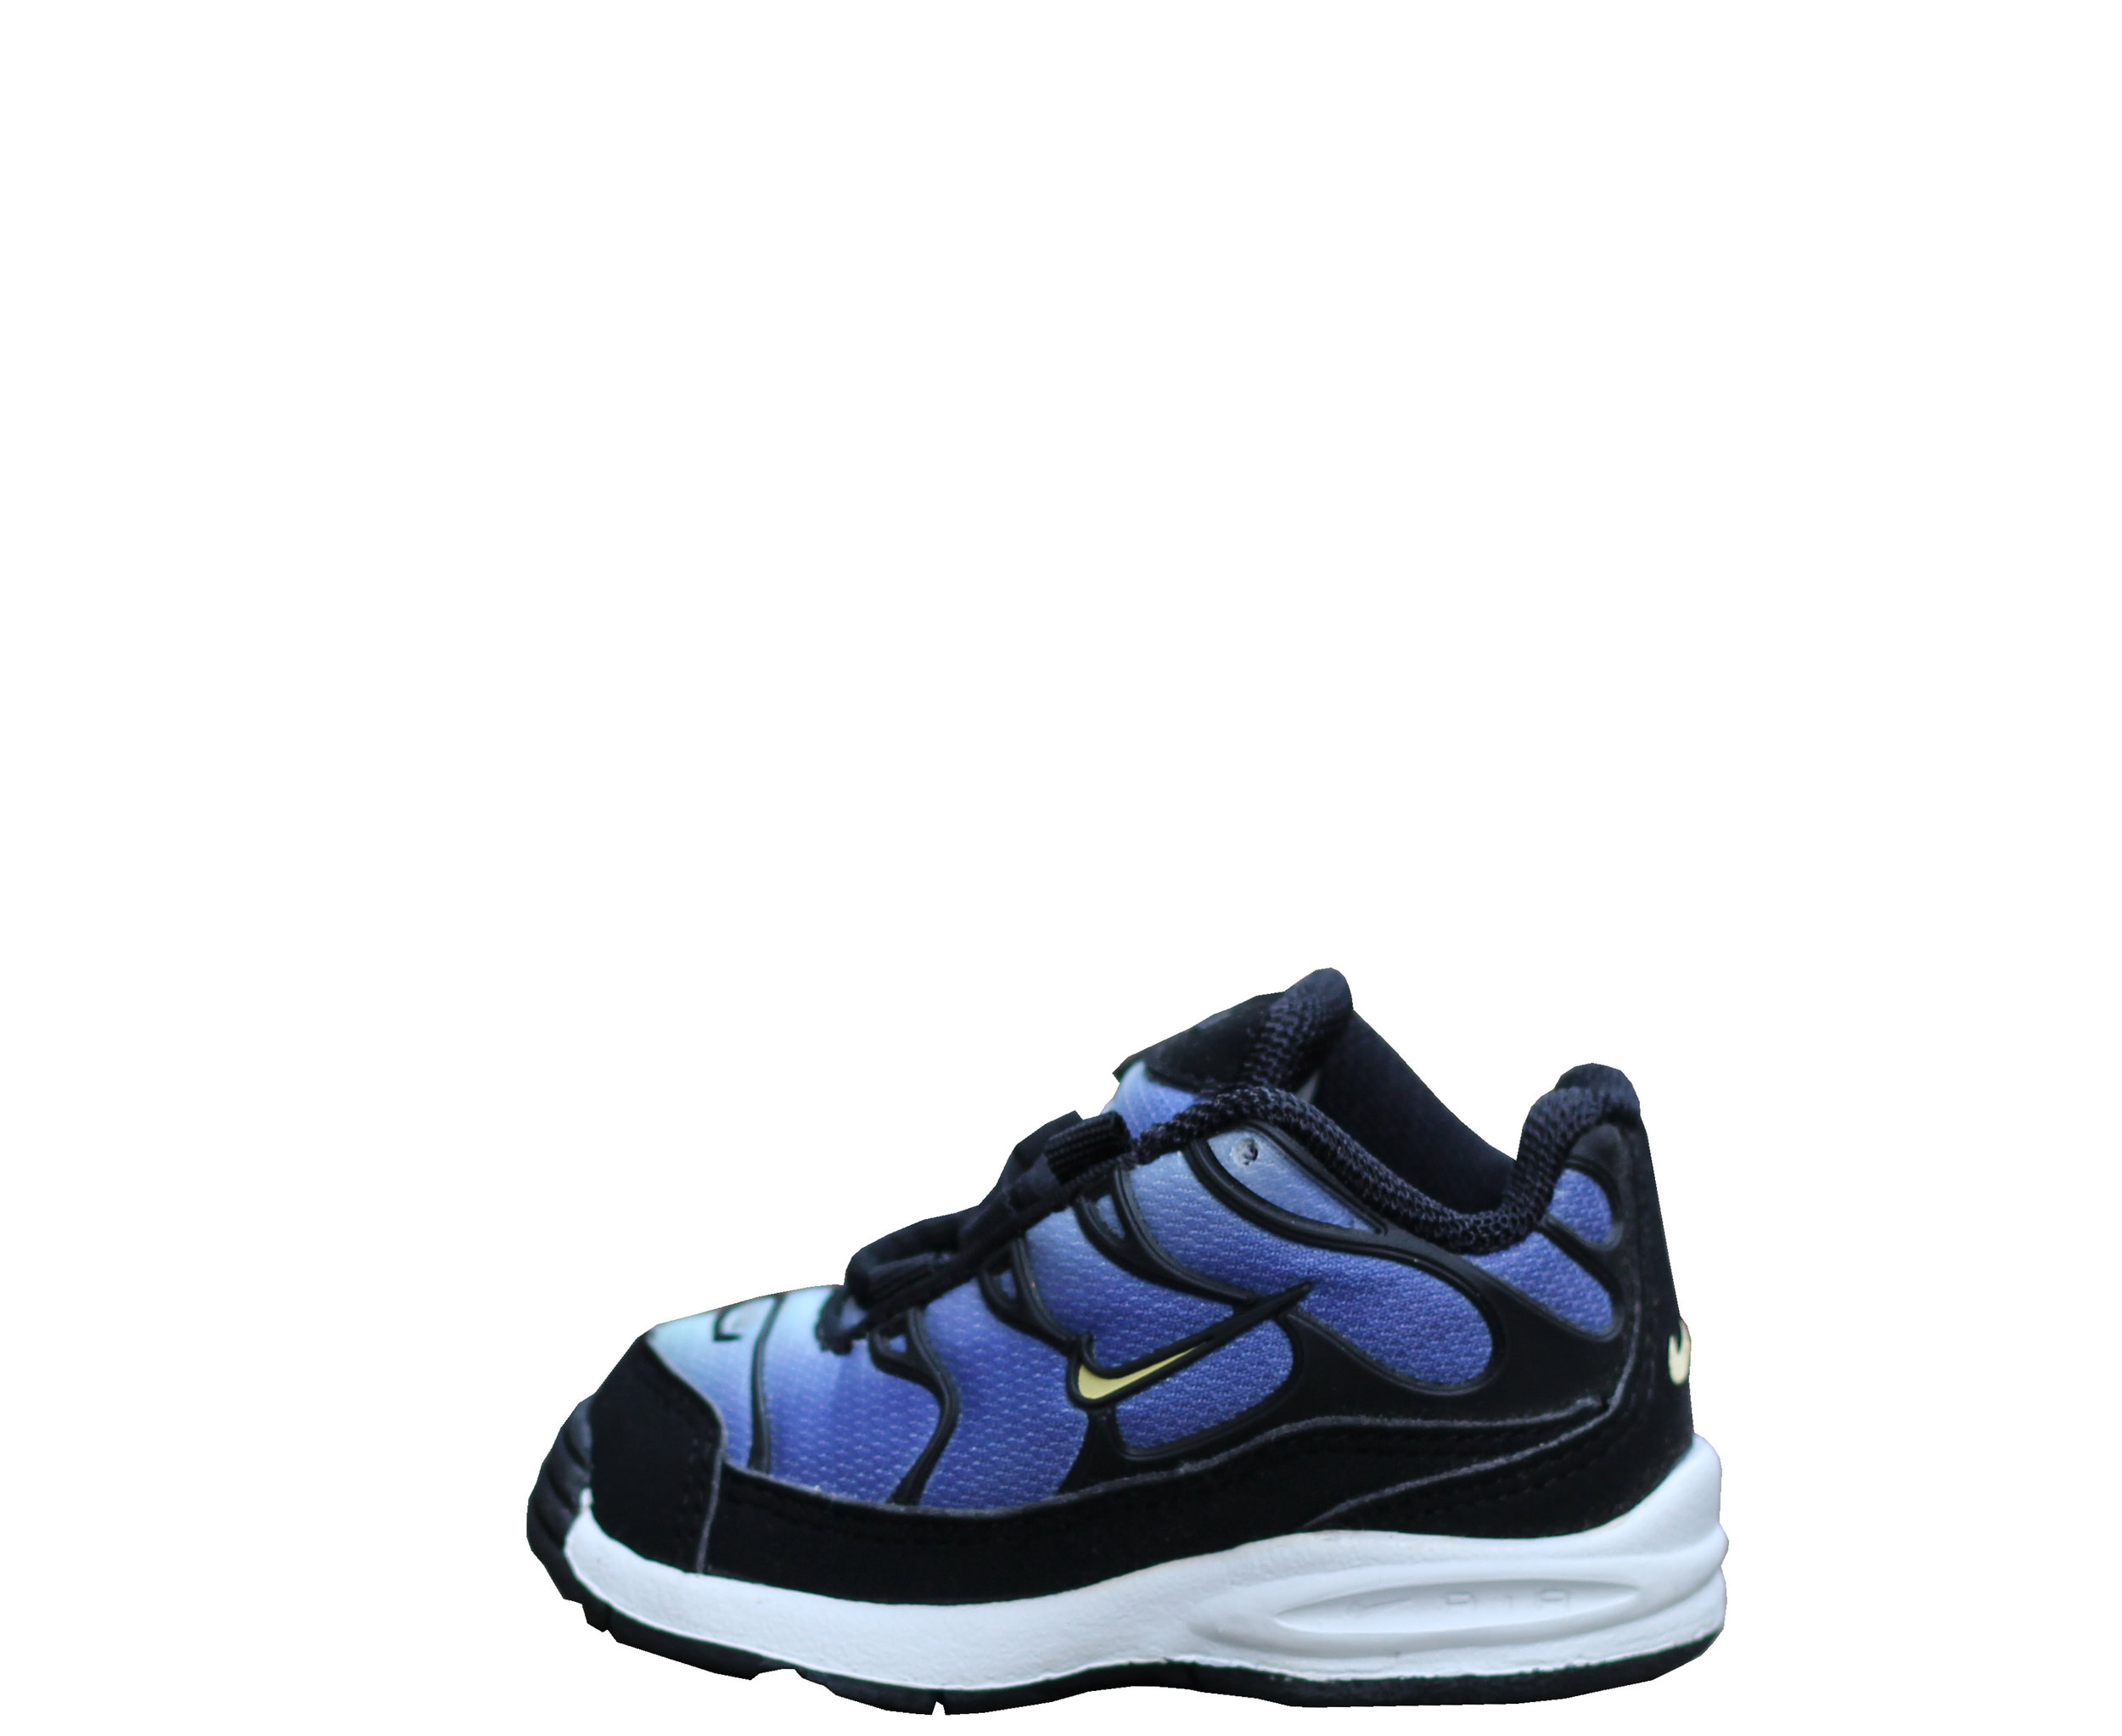 Baby Nike Air Max Plus Hyper Blue (Size 